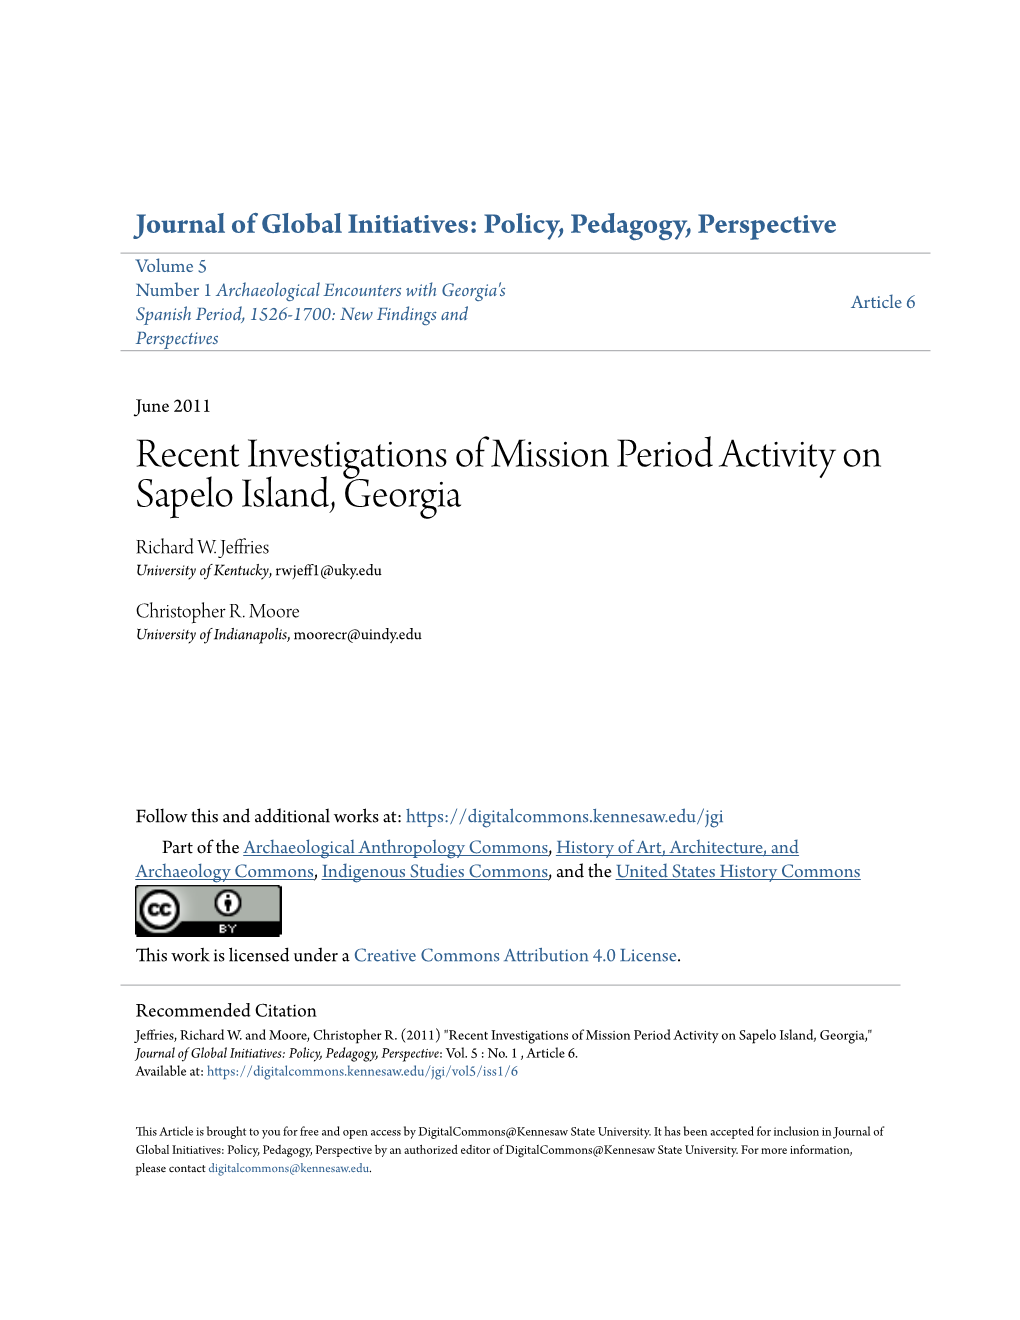 Recent Investigations of Mission Period Activity on Sapelo Island, Georgia Richard W